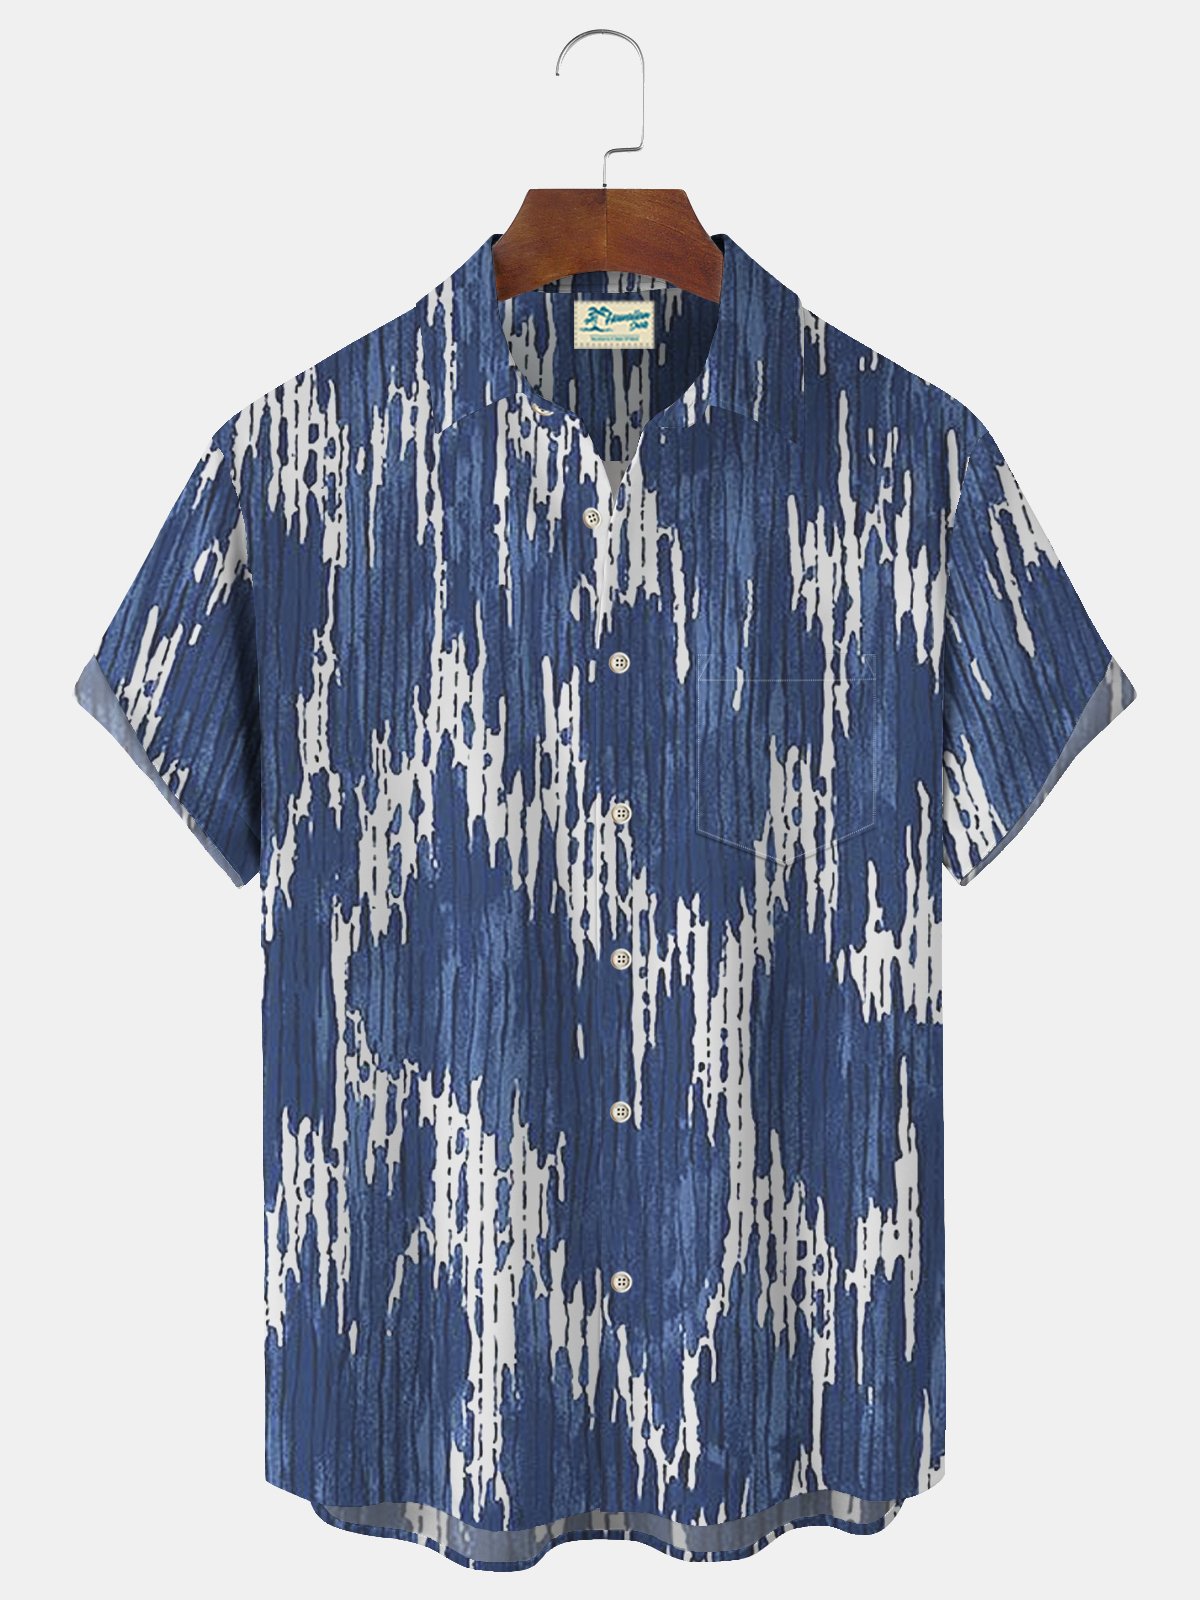 Royaura Abstract Textured Art Print Beach Men's Hawaiian Oversized Short Sleeve Shirt with Pockets